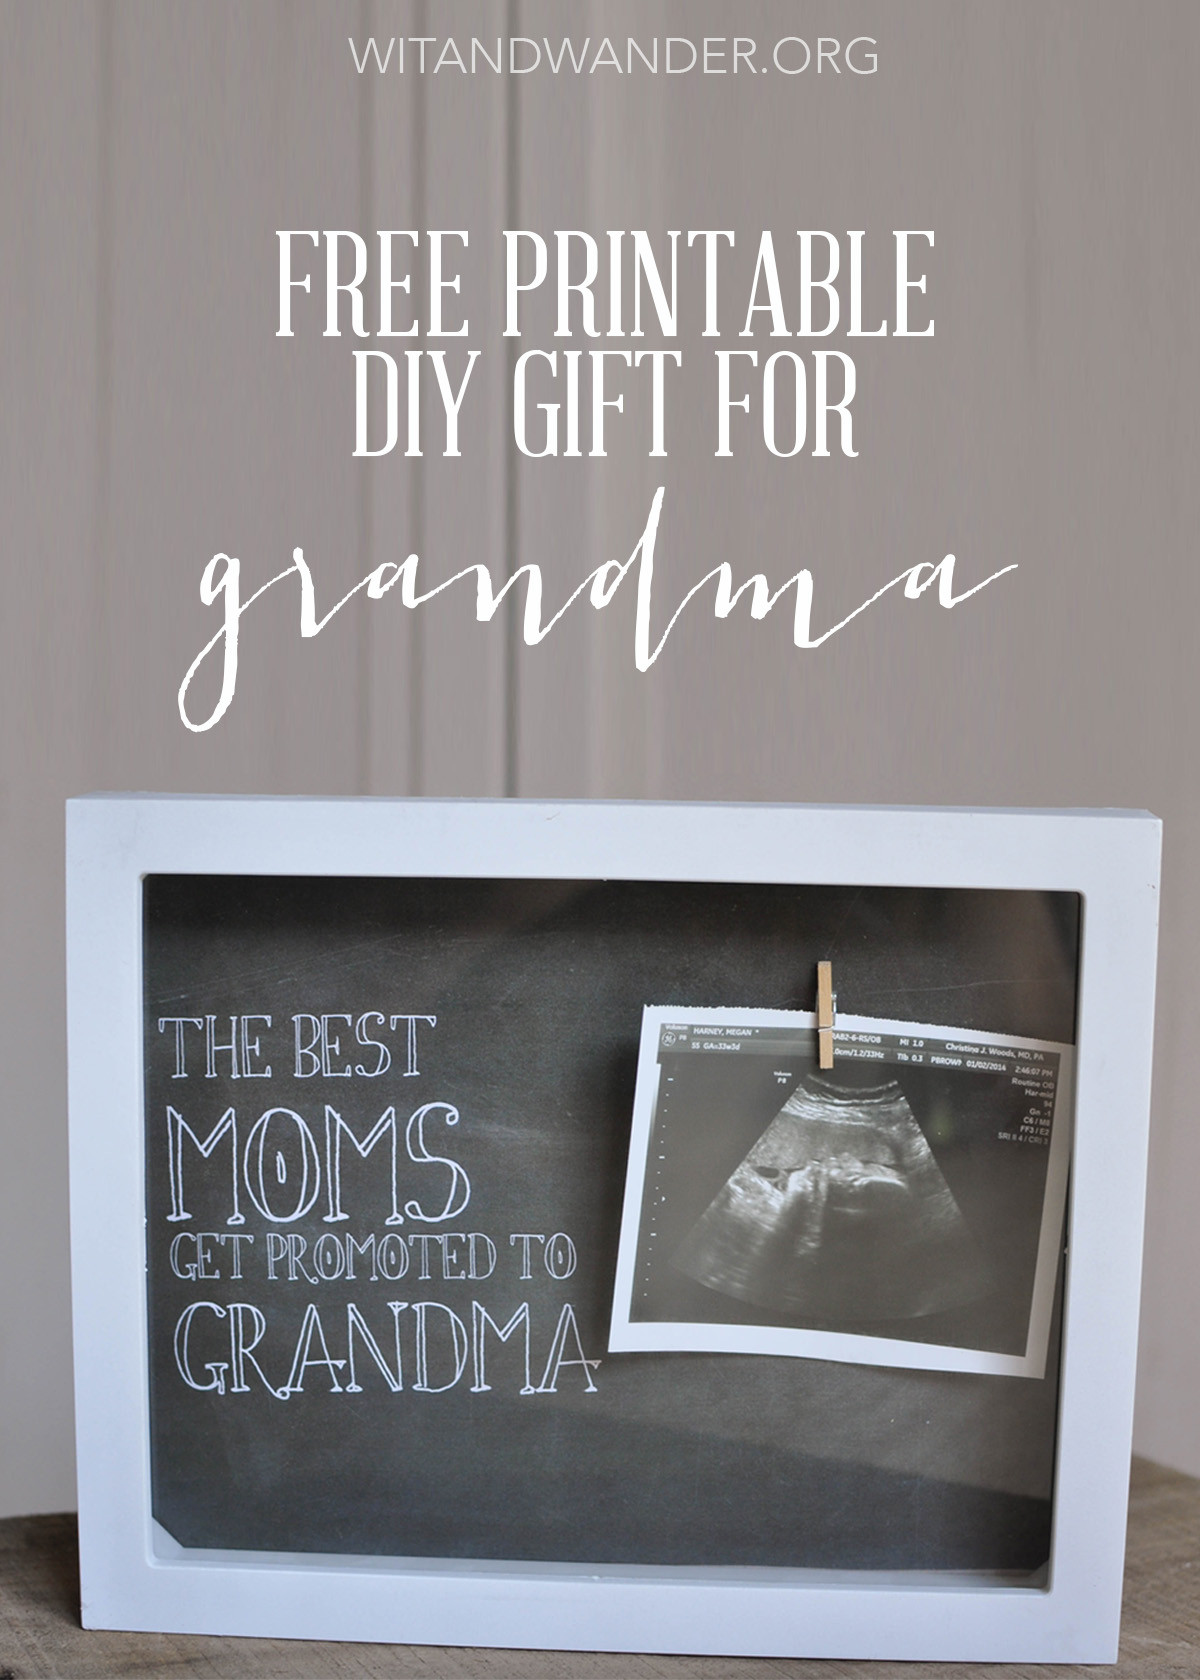 DIY Grandma Gifts
 Homemade Shadow Box Gift for Grandma Wit & Wander